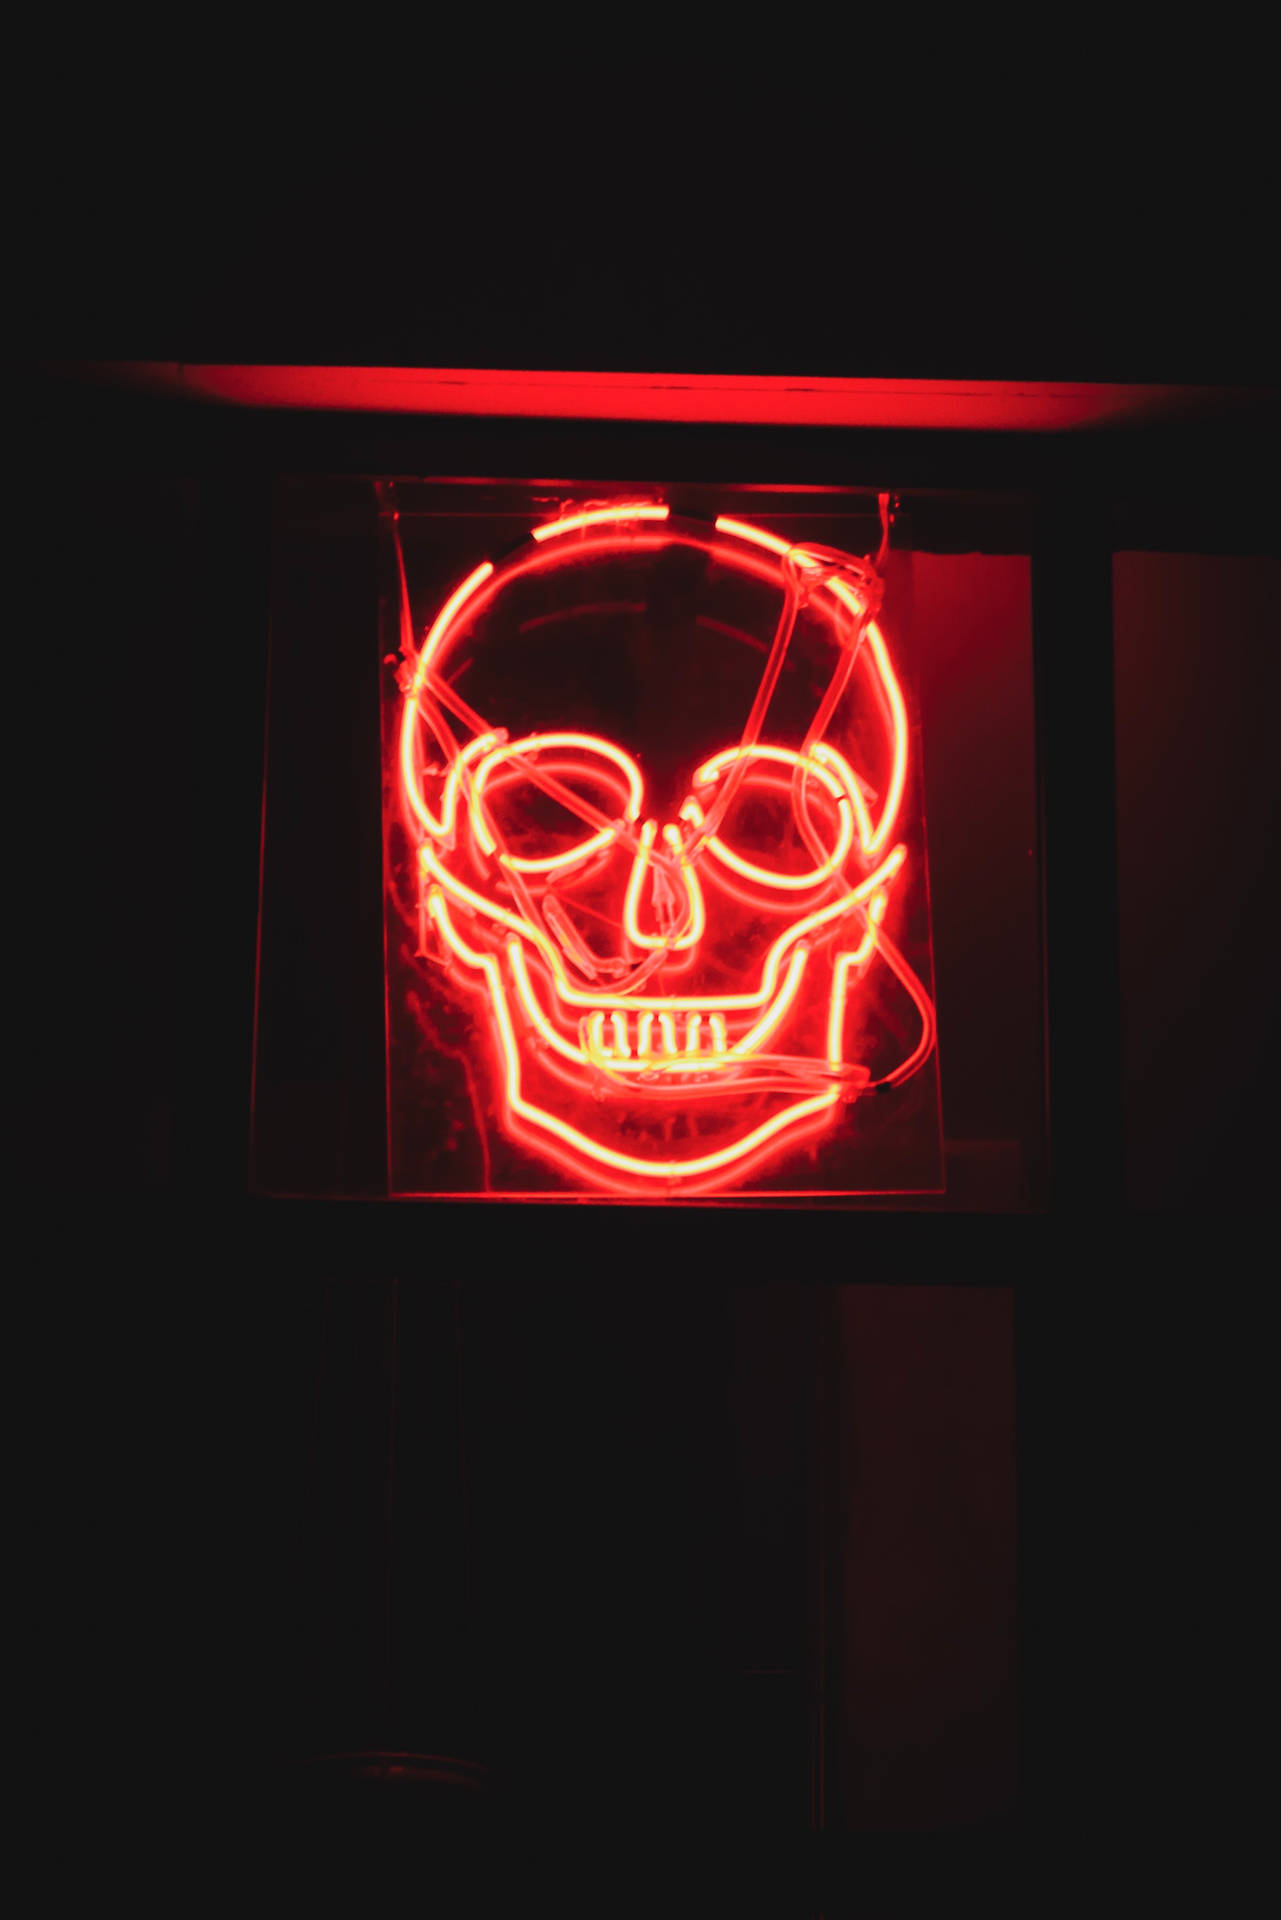 Illuminate Your World with a Neon Skull Wallpaper